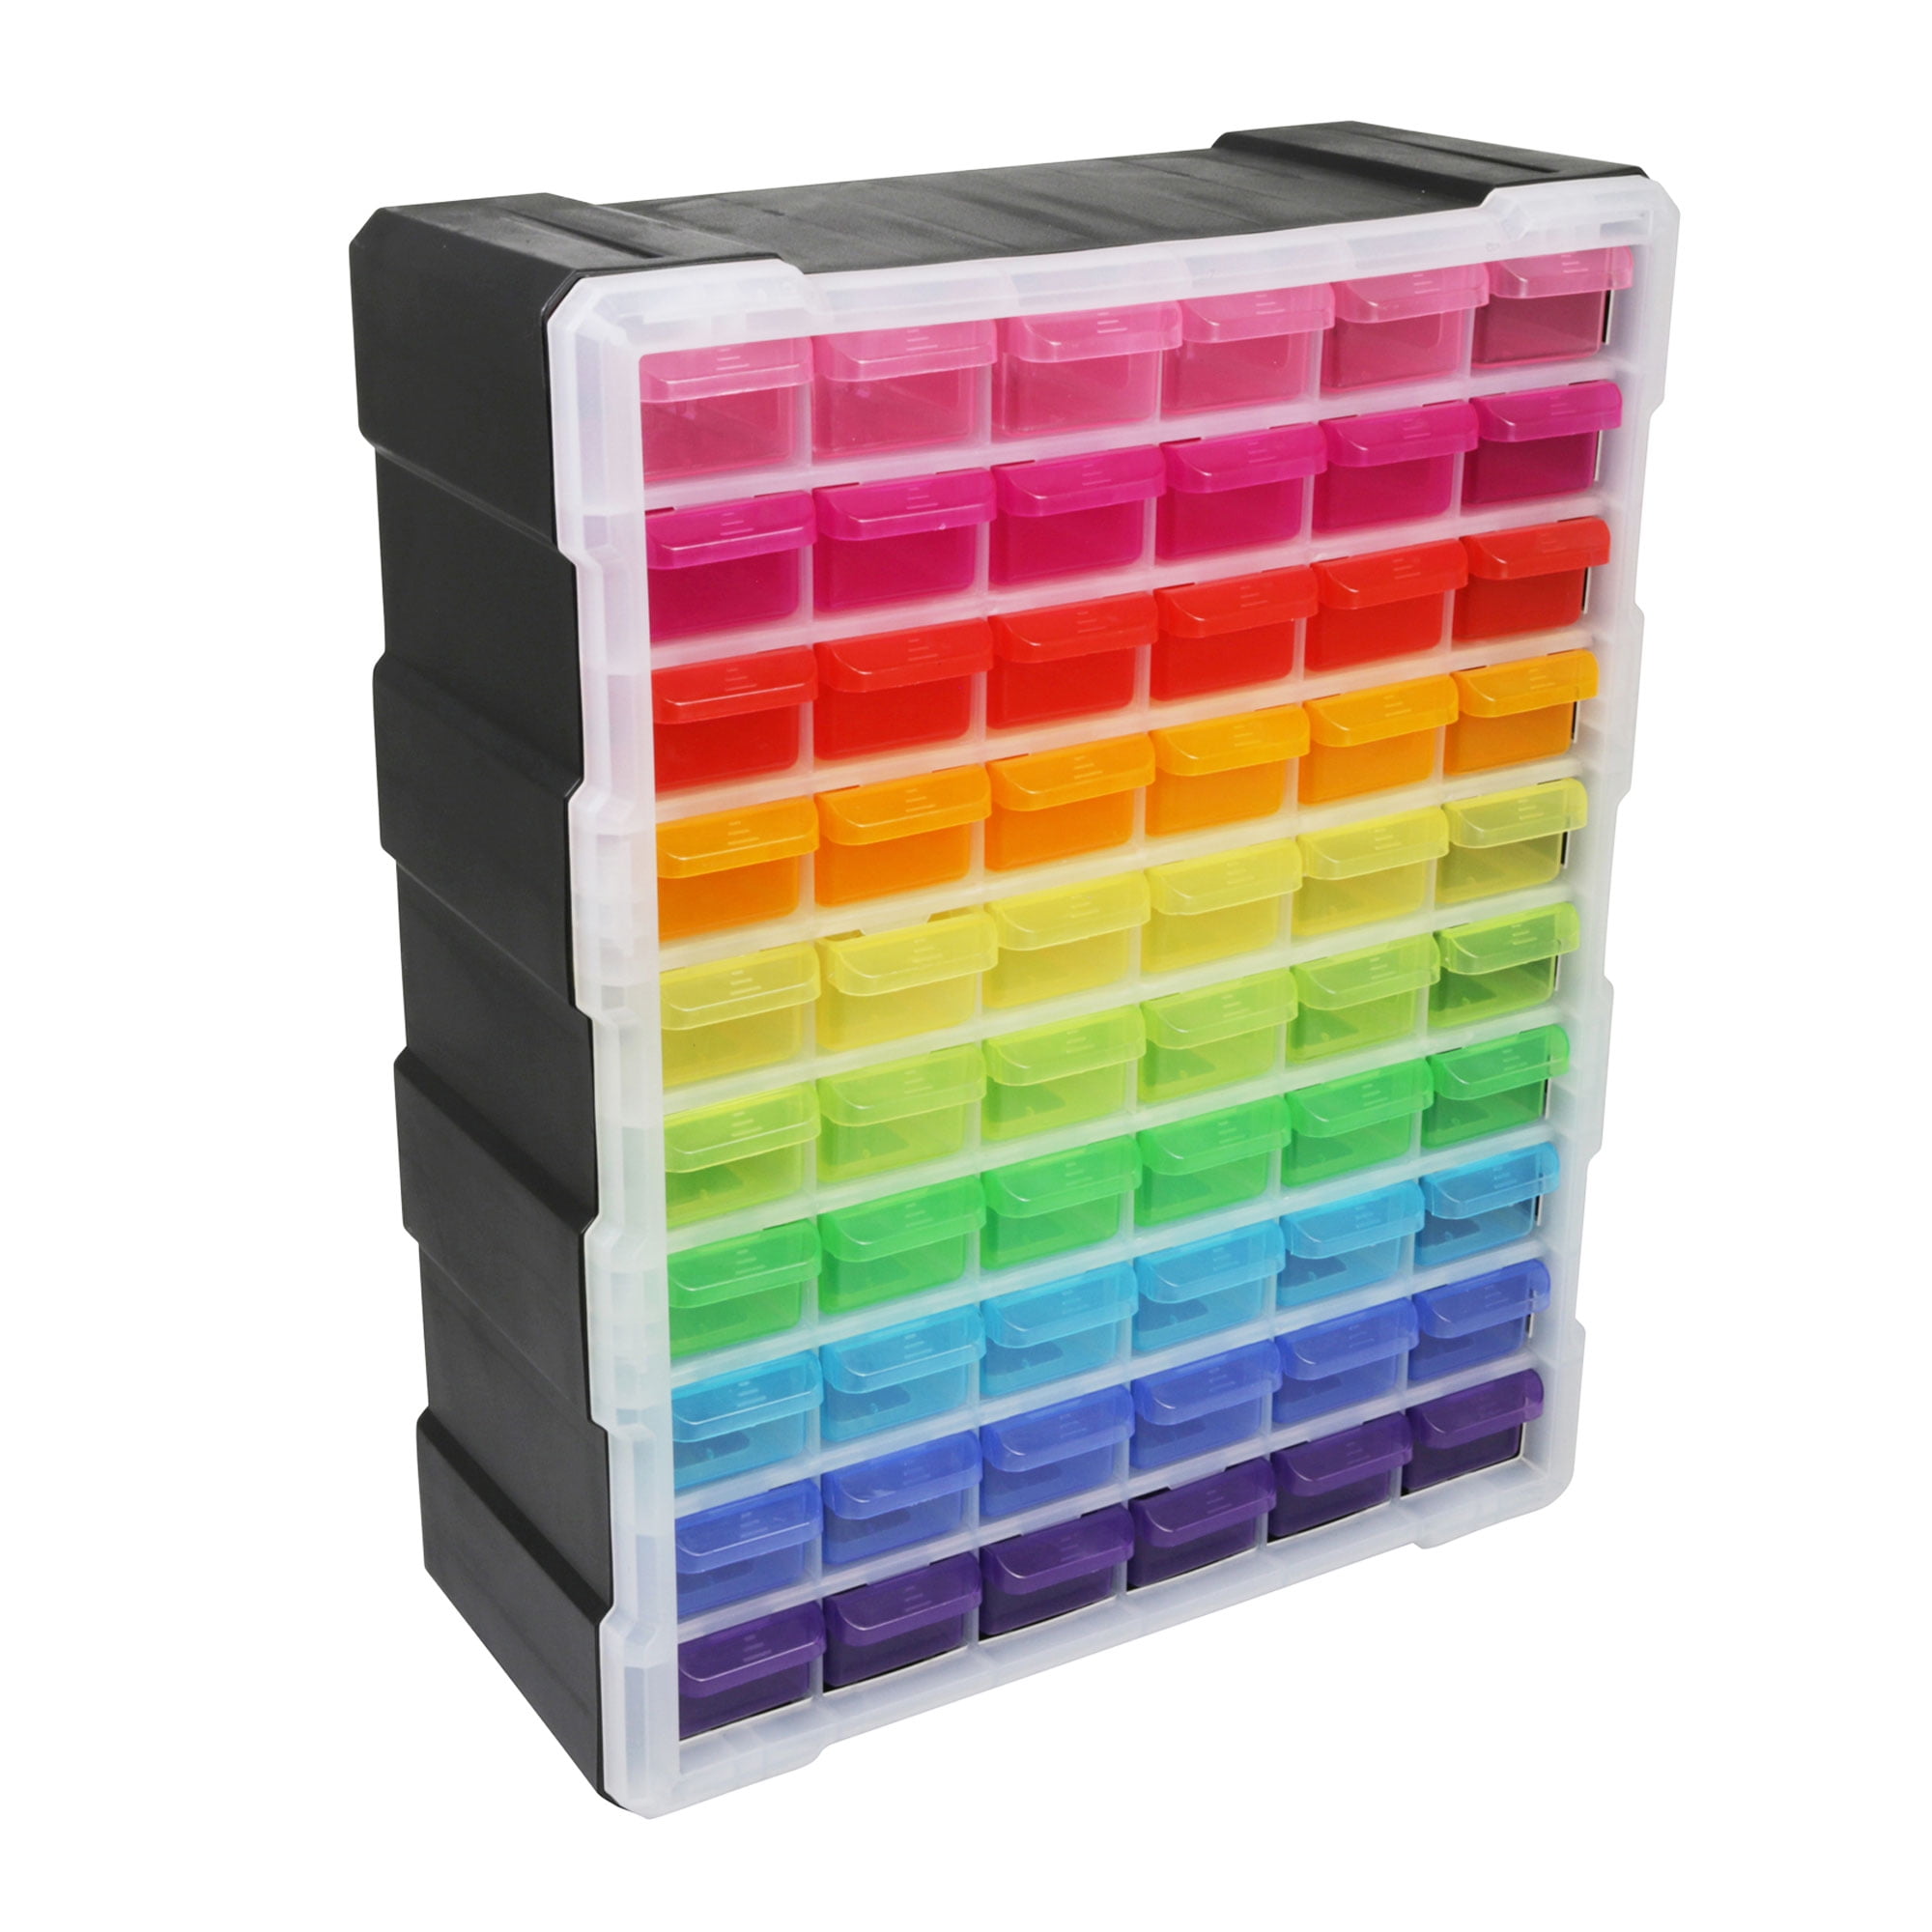 Yay! New organizer for my mini erasers🥰 Mini eraser storage idea for